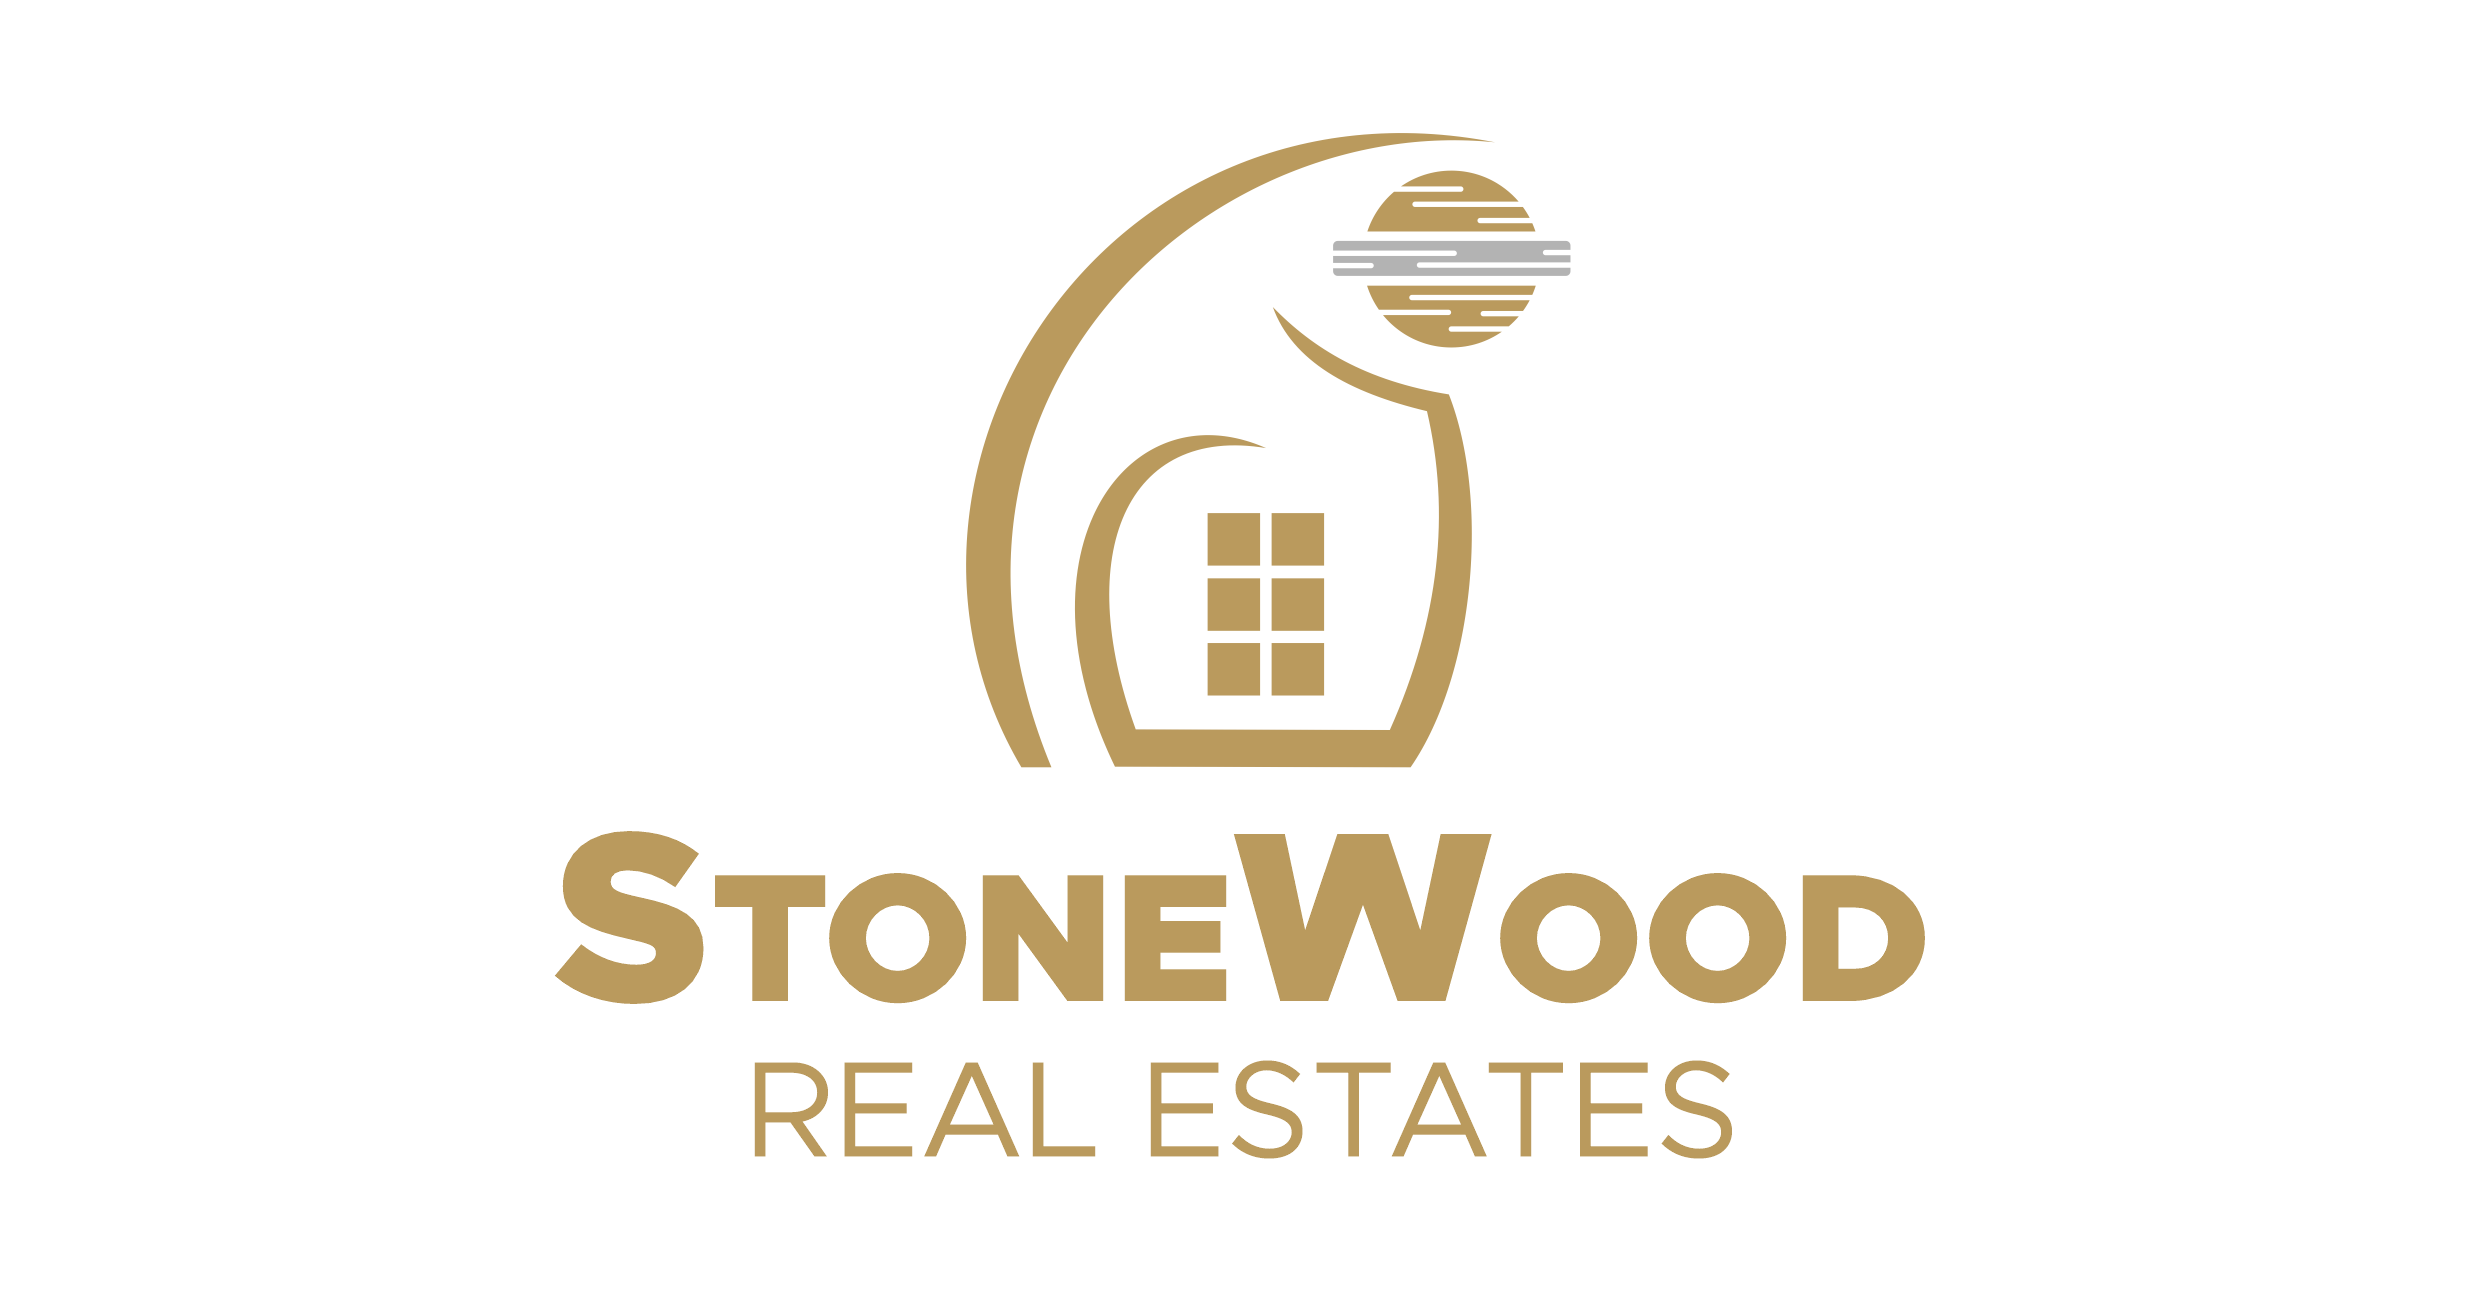 StoneWood Real Estates